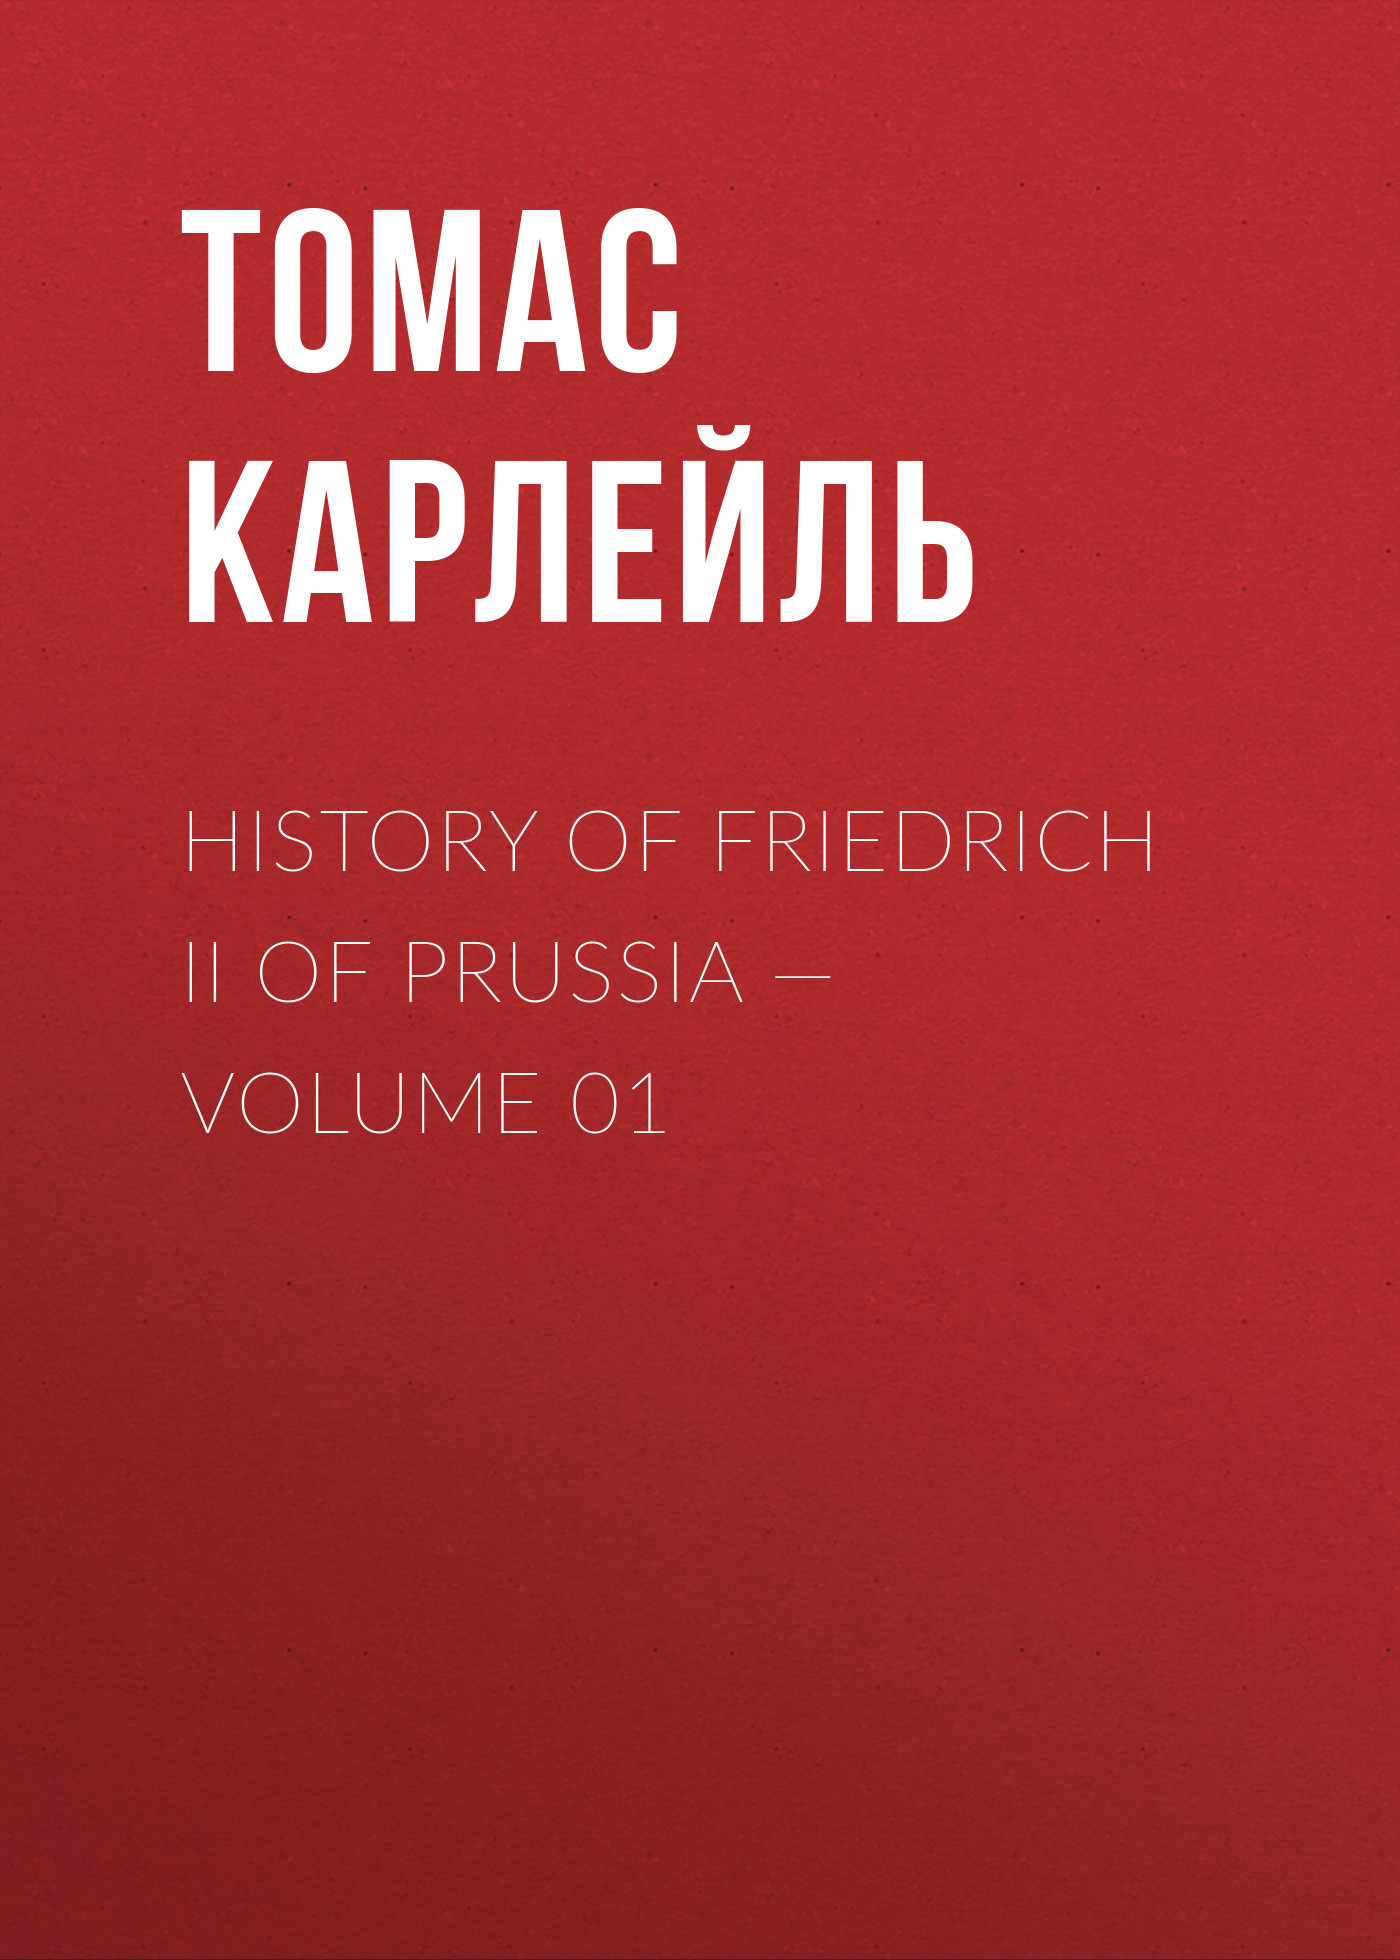 History of Friedrich II of Prussia— Volume 01